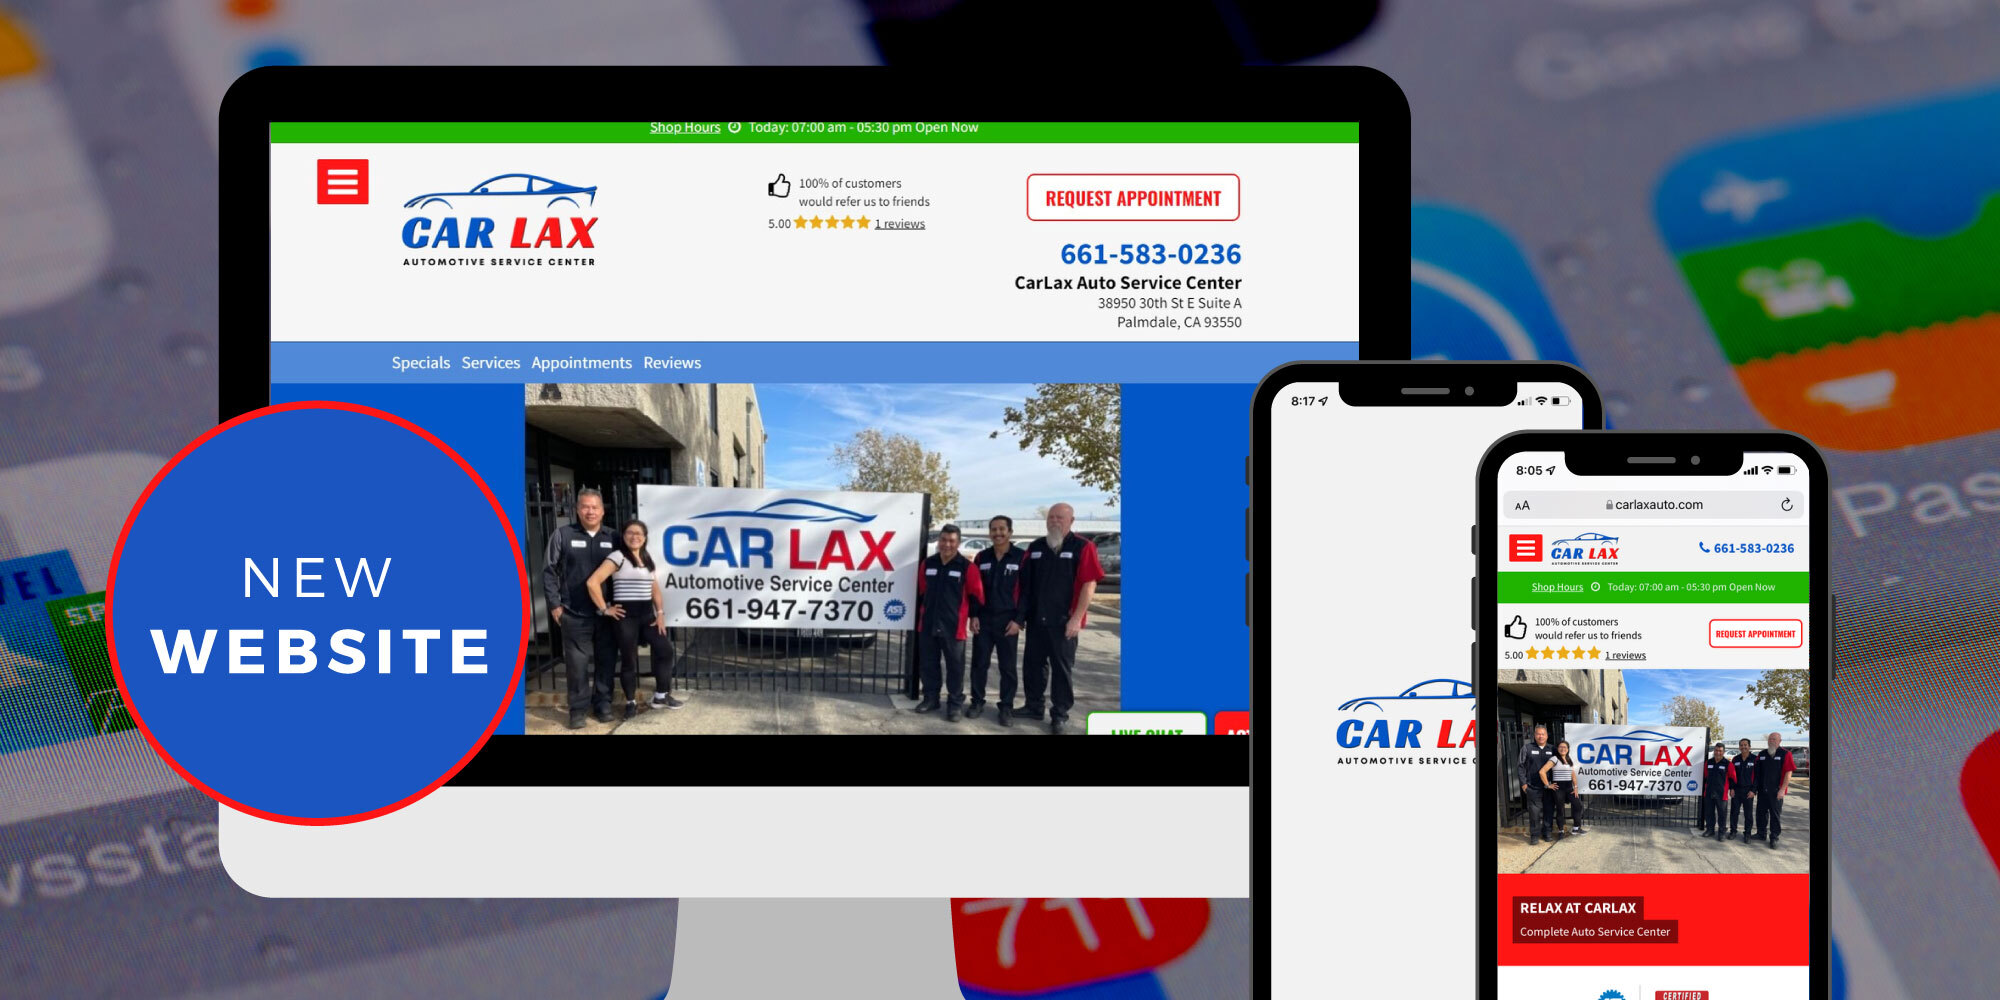  CarLax Auto Service Center Website